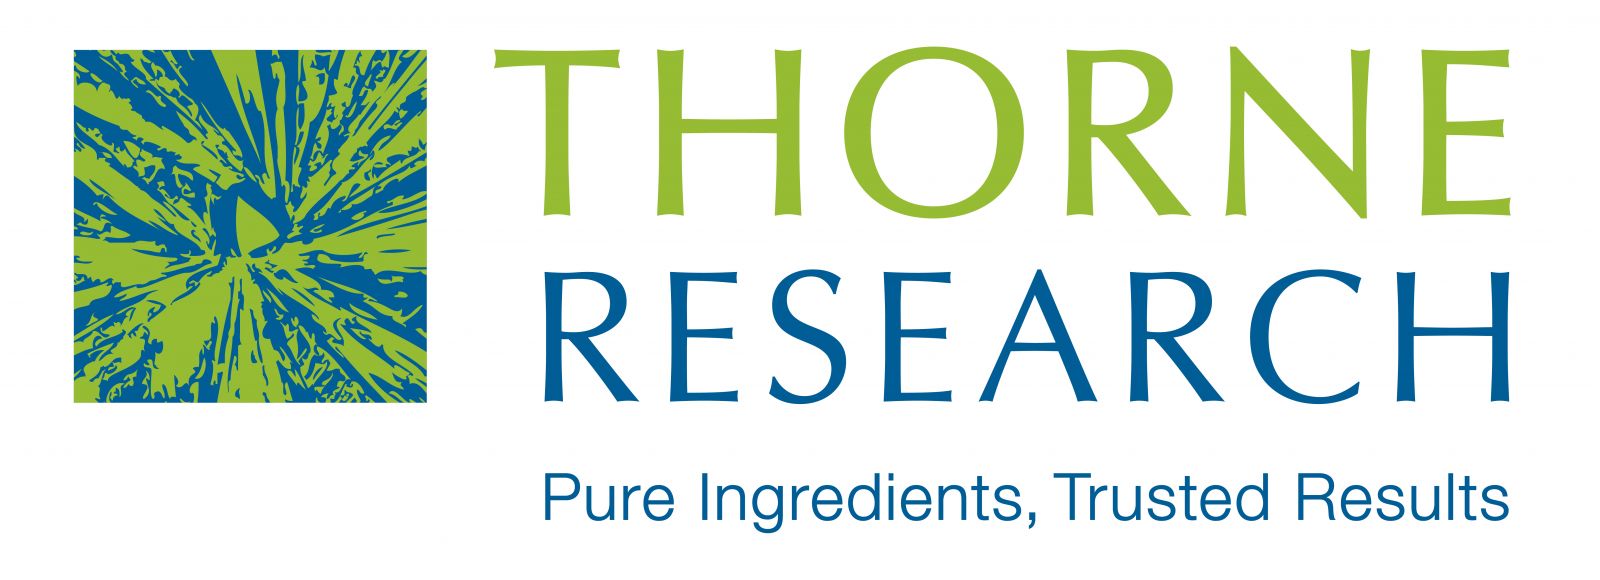 http://blog.wellnessfx.com/wp-content/uploads/2013/12/Thorne-Research-logo.jpg